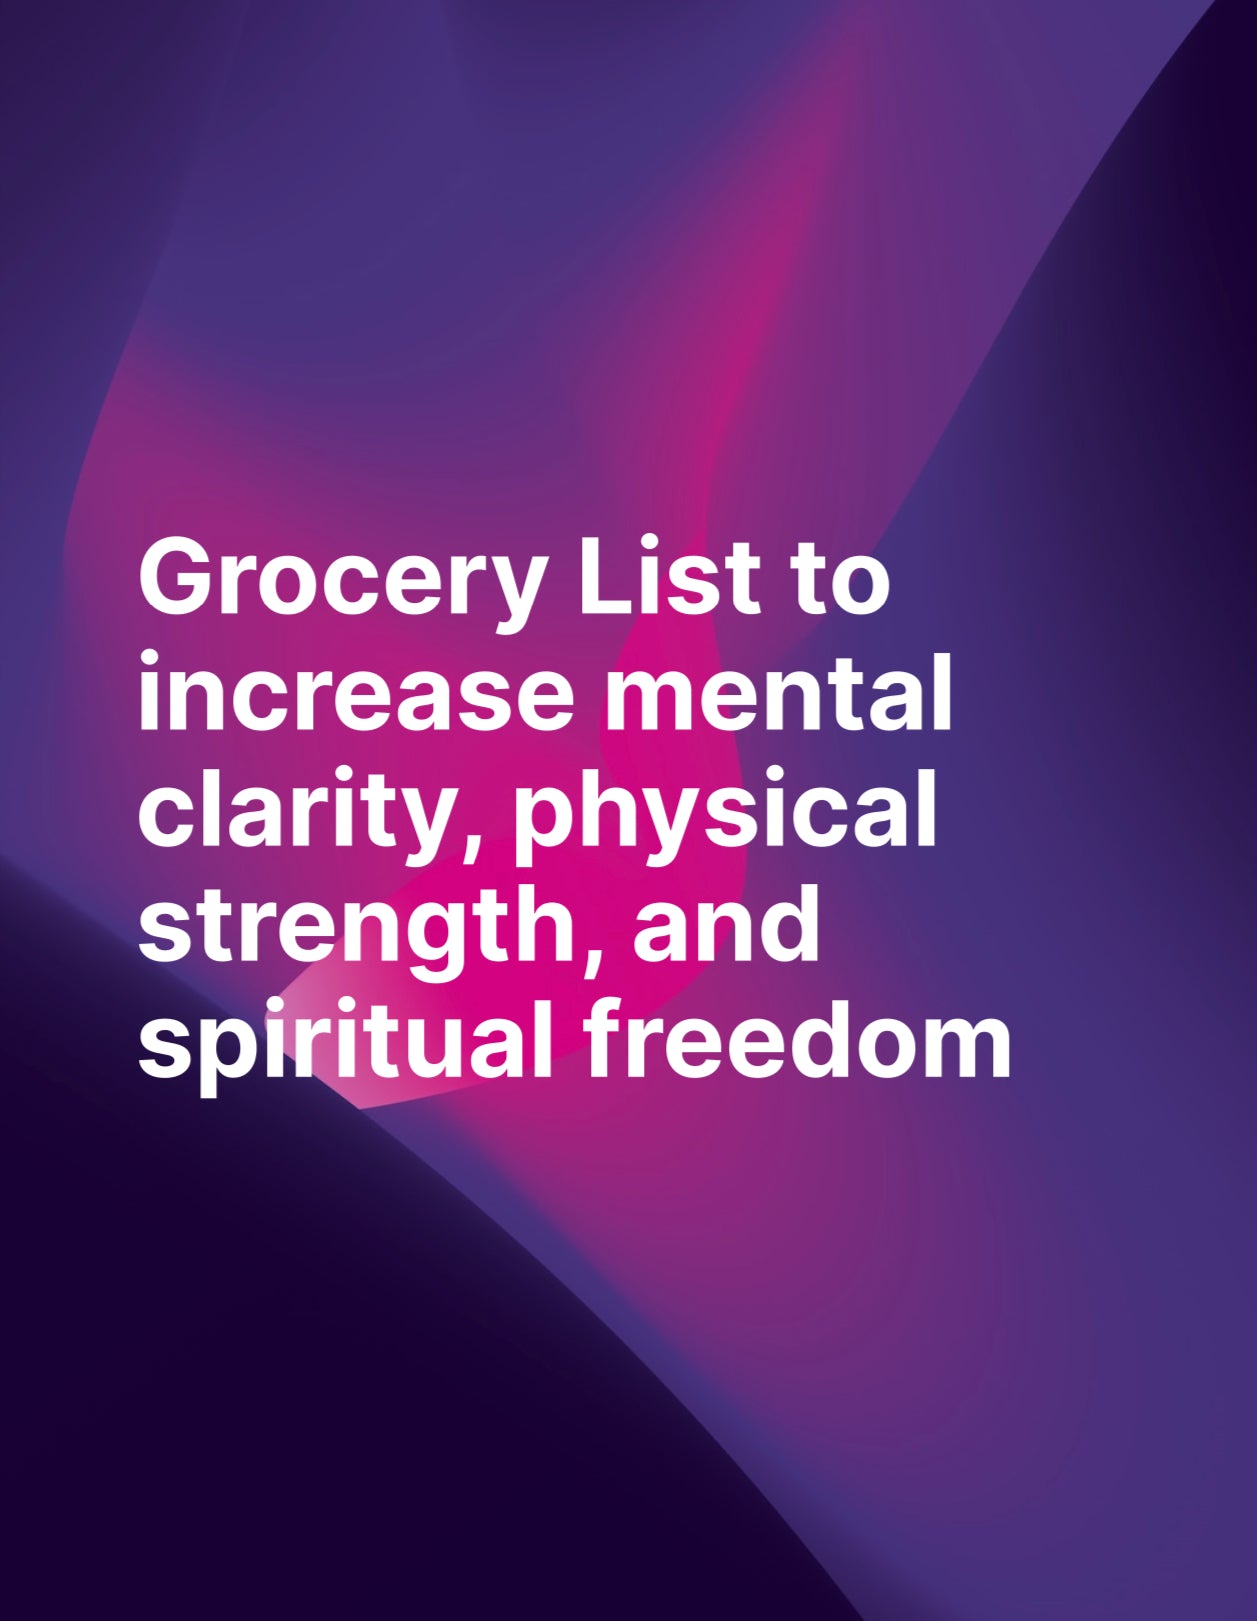 Grocery list